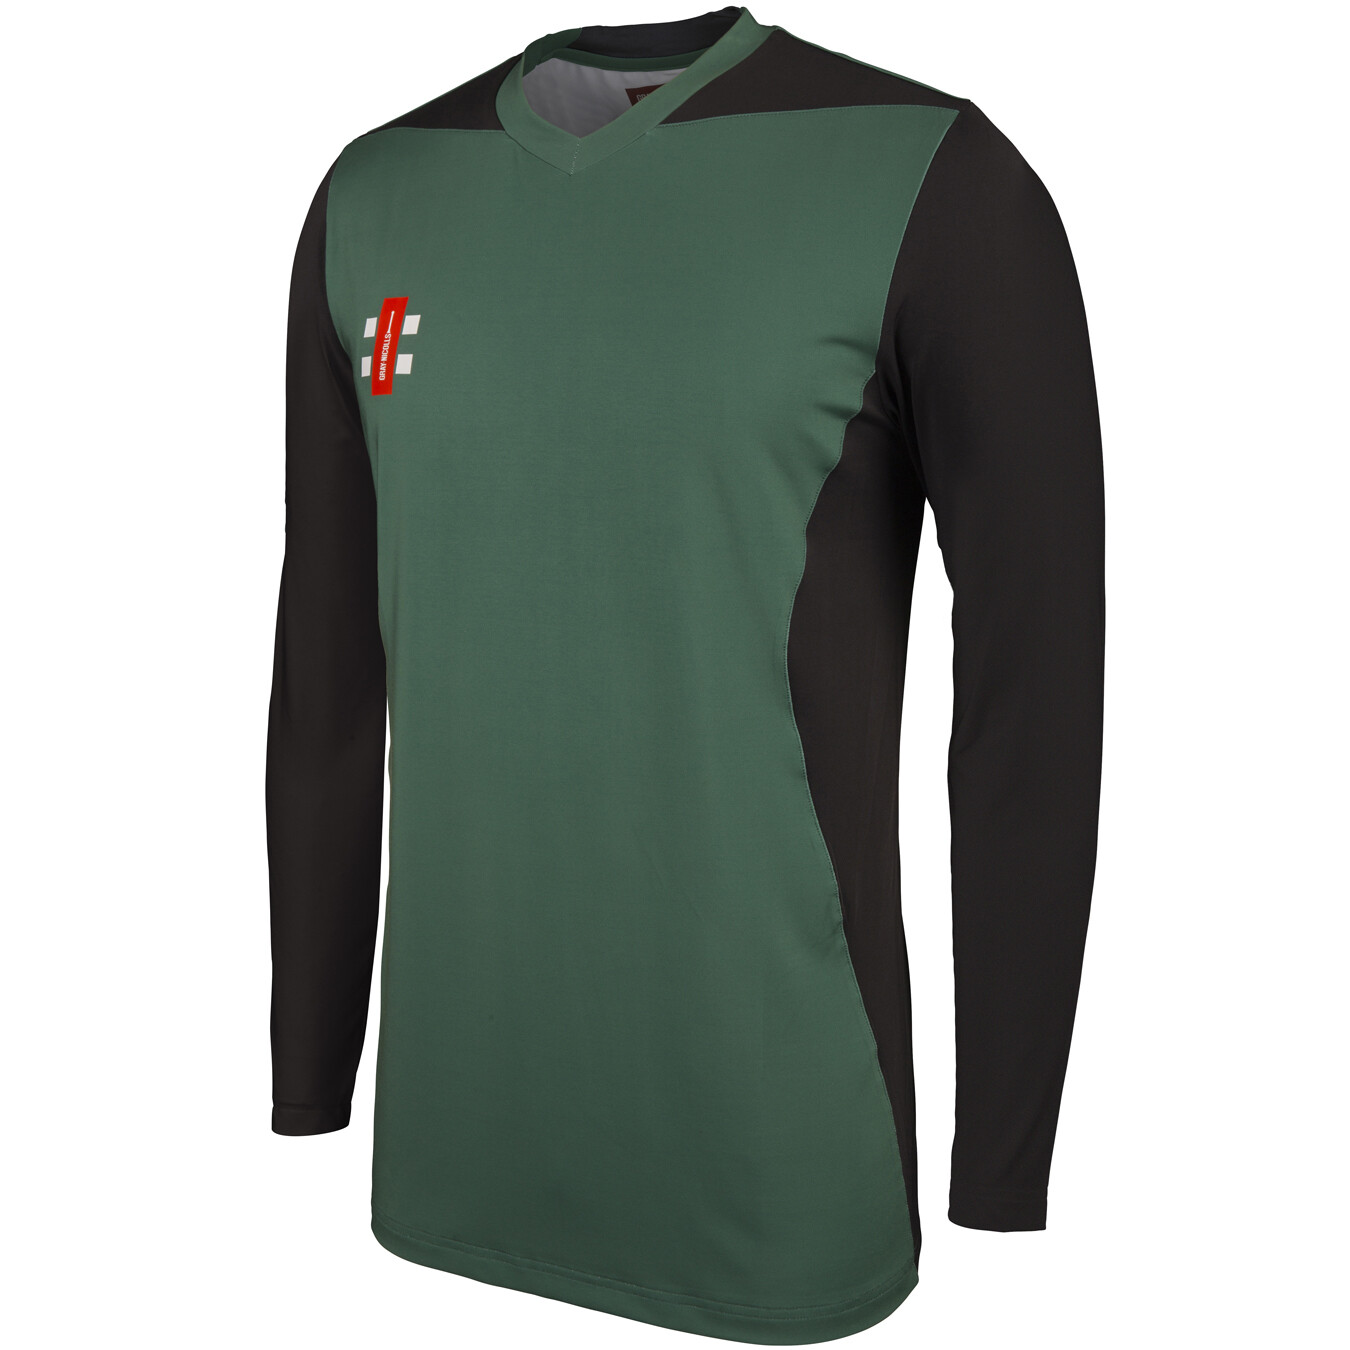 Burnhope Pro Performance T20 Long Sleeve Cricket Shirt